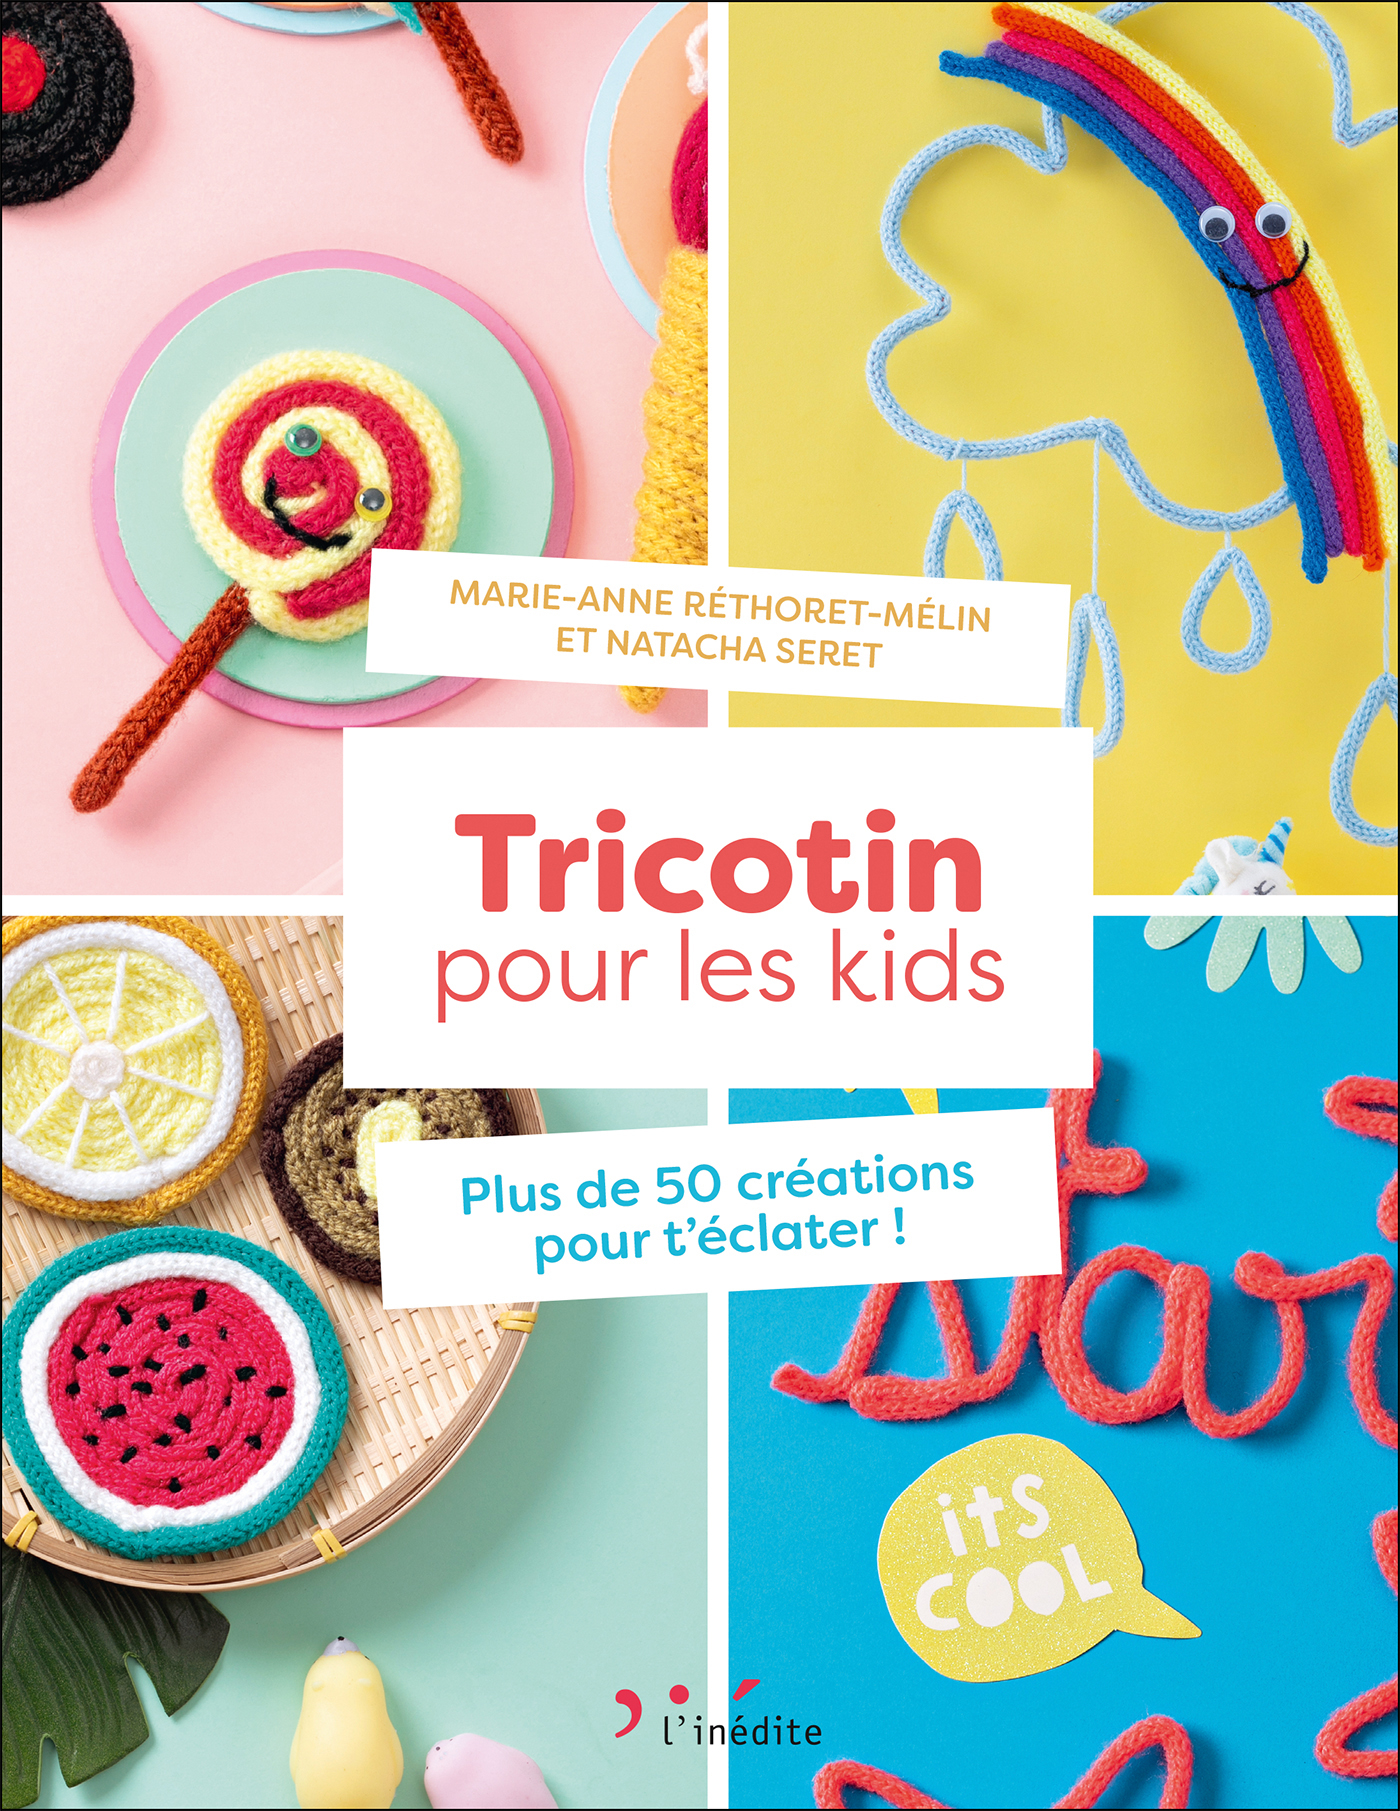  Tricotin